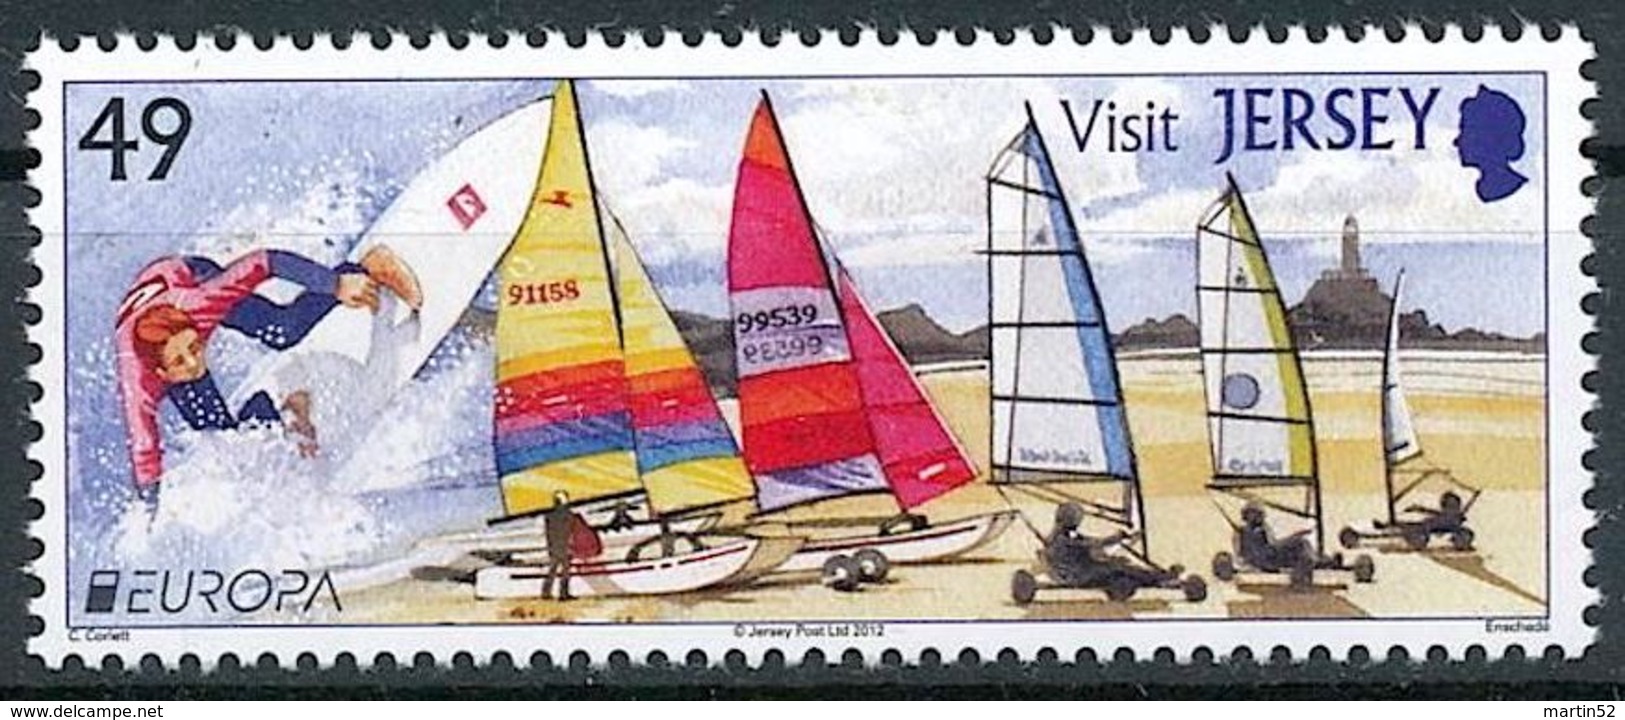 Jersey 2012: "Surfing, Sailing & Windsurfing" Michel-No. 1615 ** MNH - START BELOW POSTAL FACE VALUE (£ 0.49) - Water-skiing